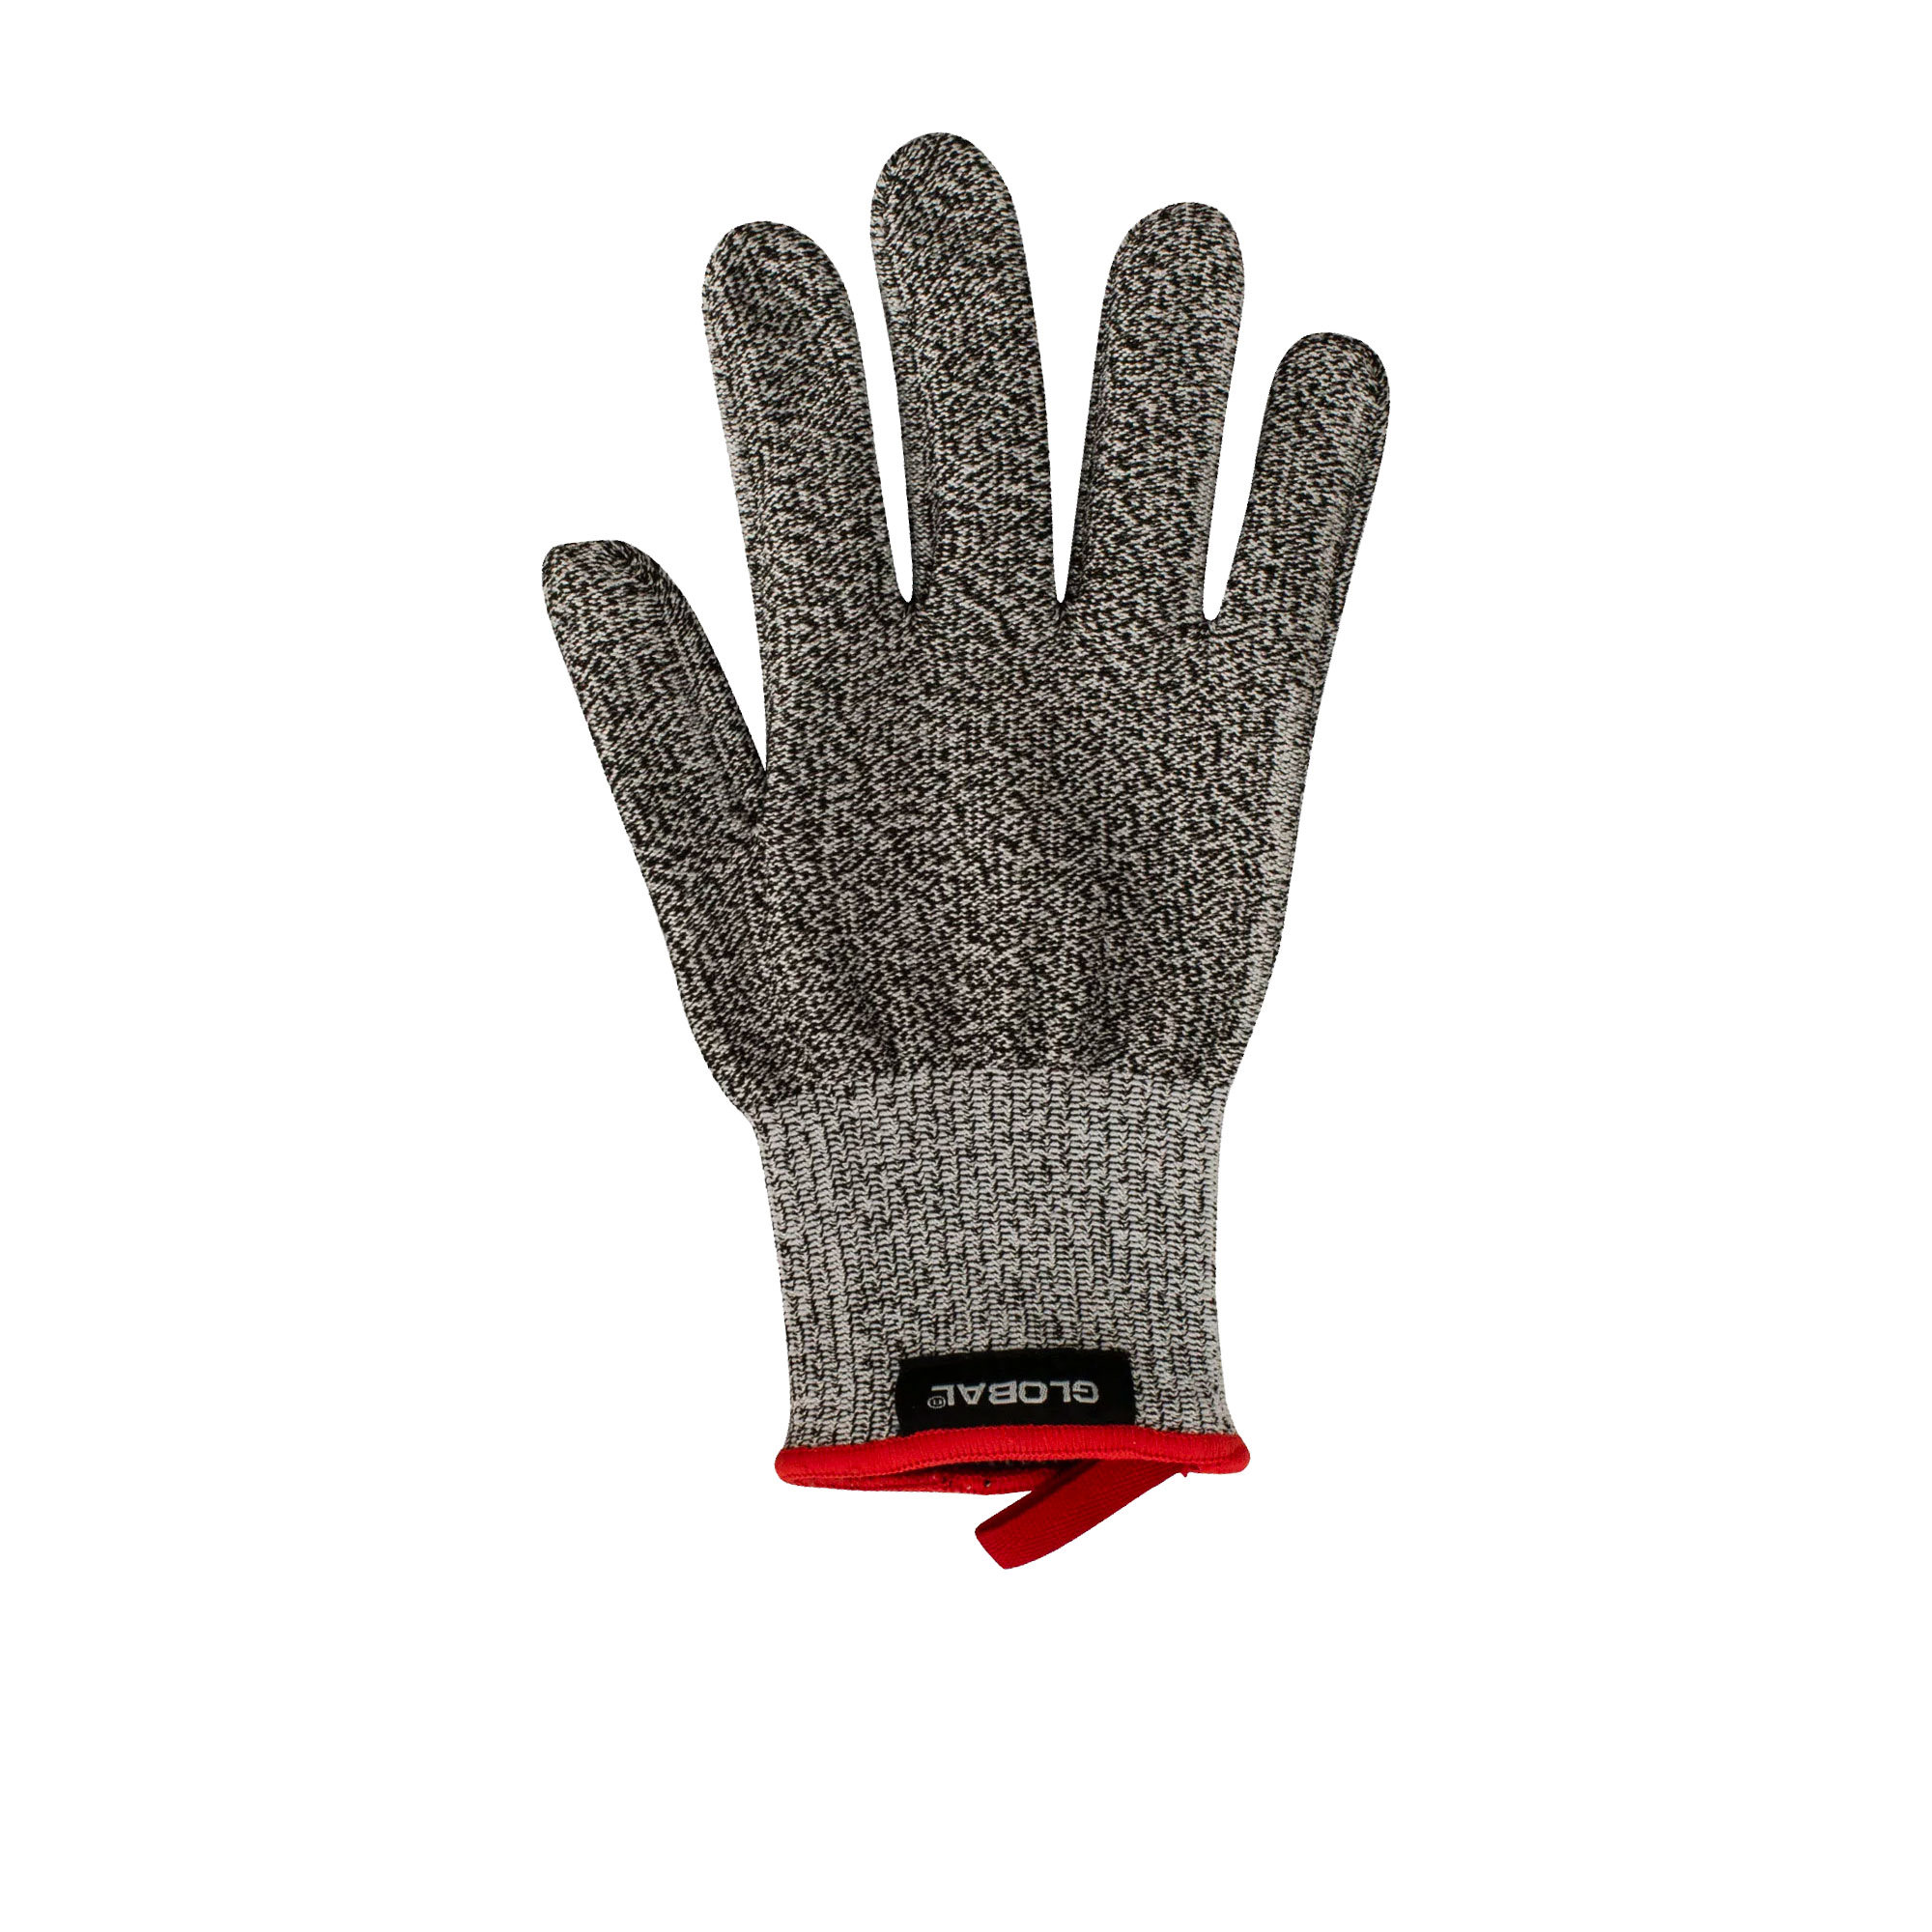 https://www.ocka.com.au/kwh/images/2000px/Global-Cut-Resistant-Gloves-Grey_1_2000px.jpg?imagetype=pdp_full